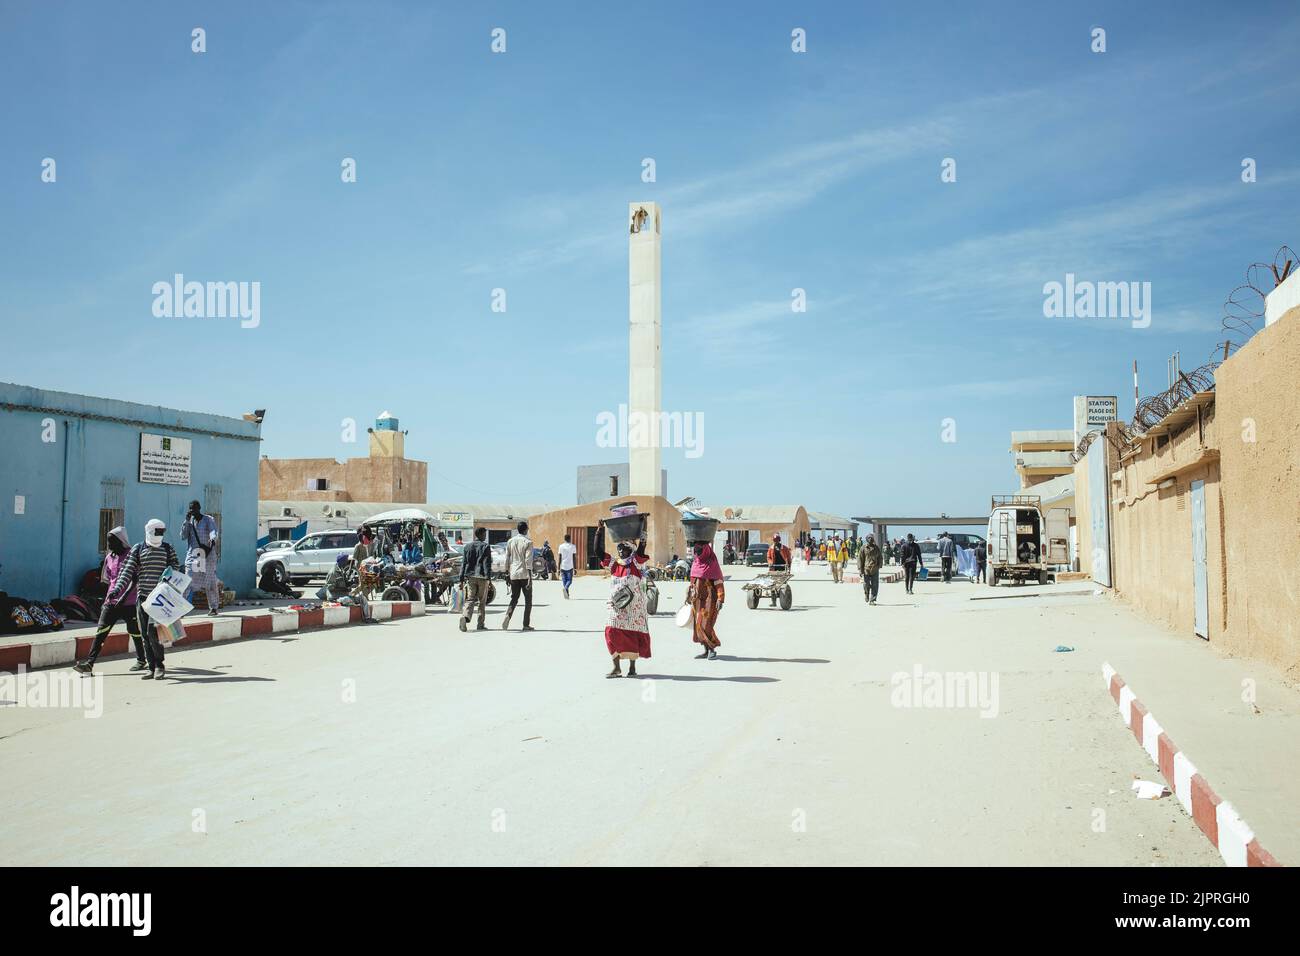 Traditional fishing beach, Plage des Pecheurs Traditionnels, port area and market halls, Nouakchott, Mauritania Stock Photo